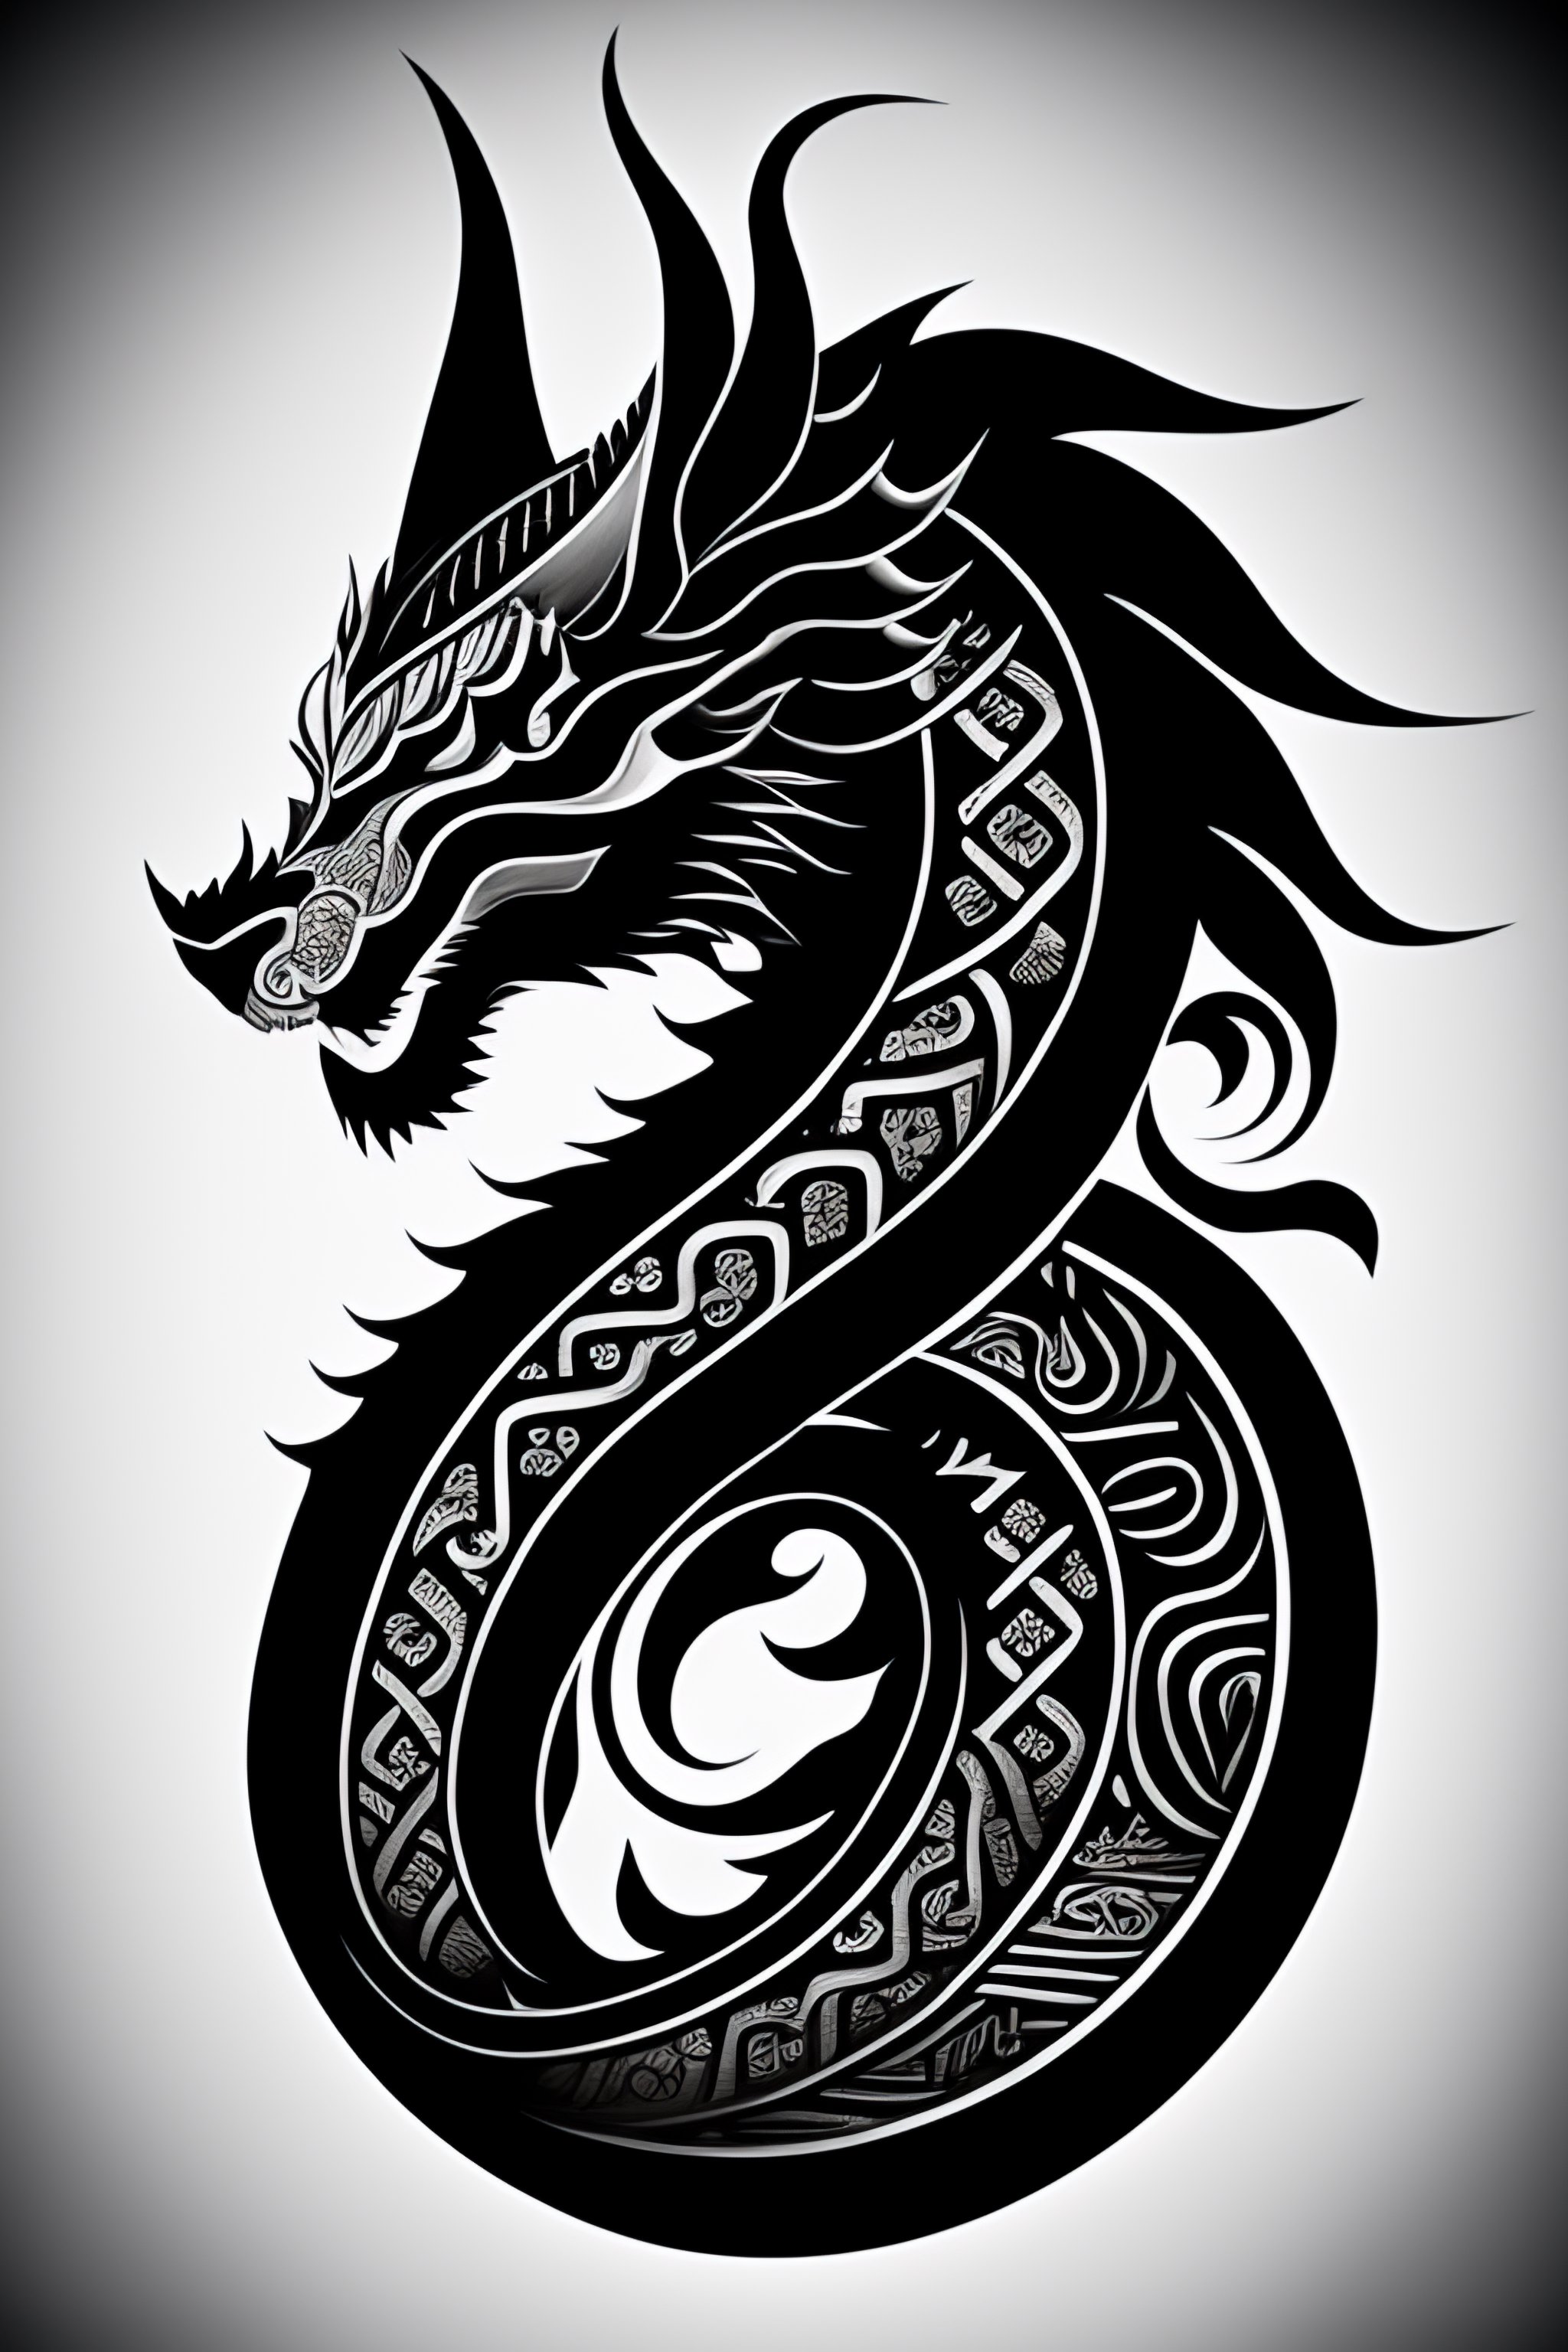 Lexica - A tribal Chinese dragon tattoo by Eiichiro Oda, high poly